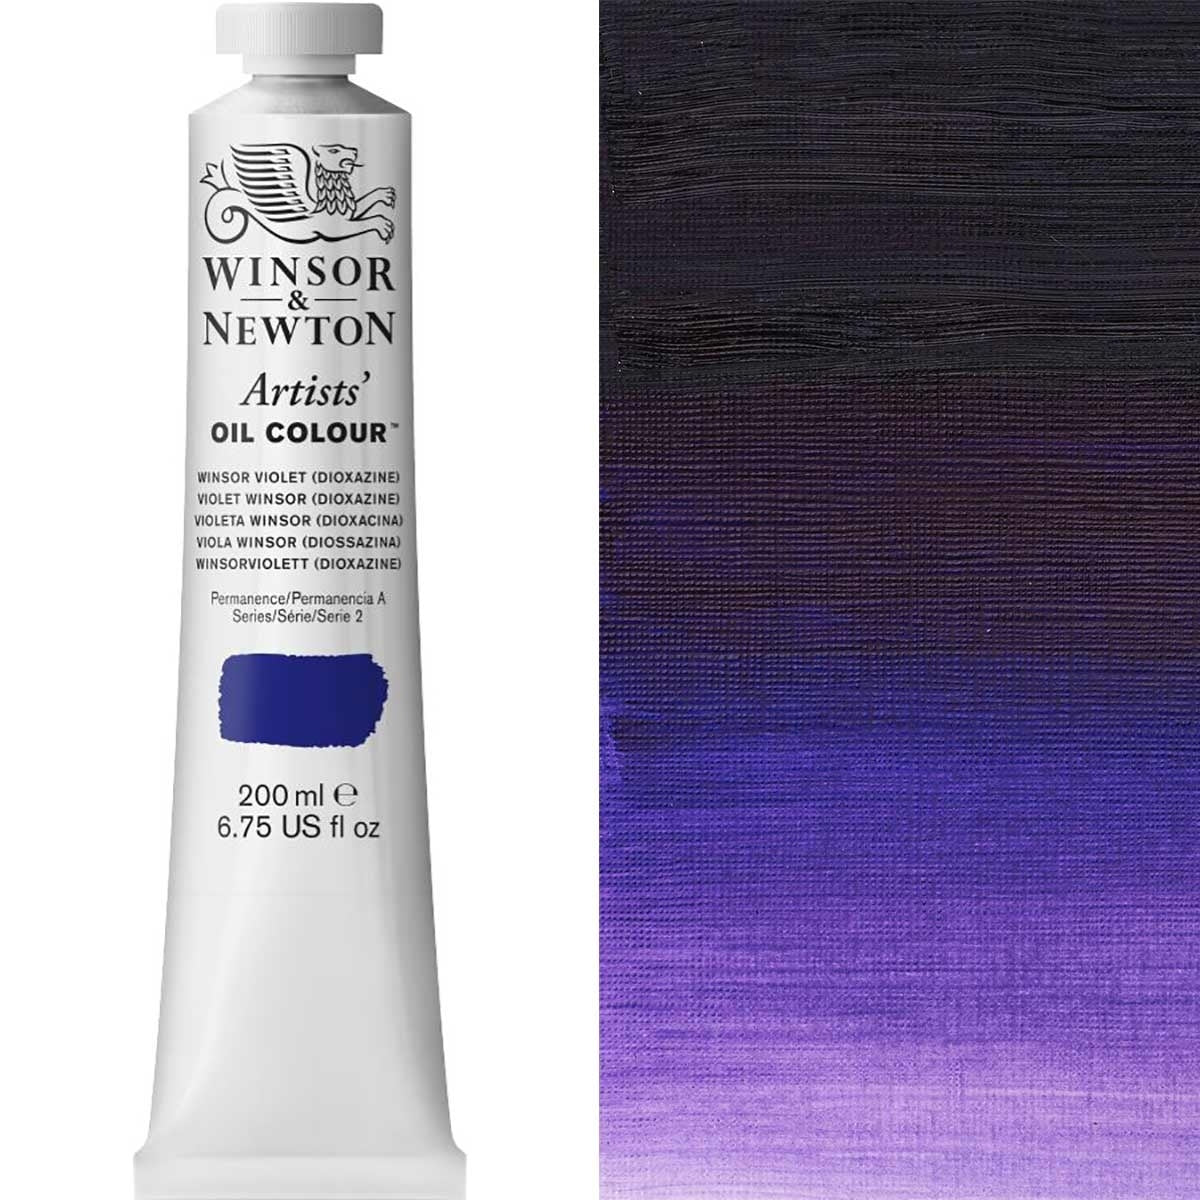 Winsor and Newton - Artists' Oil Colour - 200ml - Winsor Violet Dioxazine